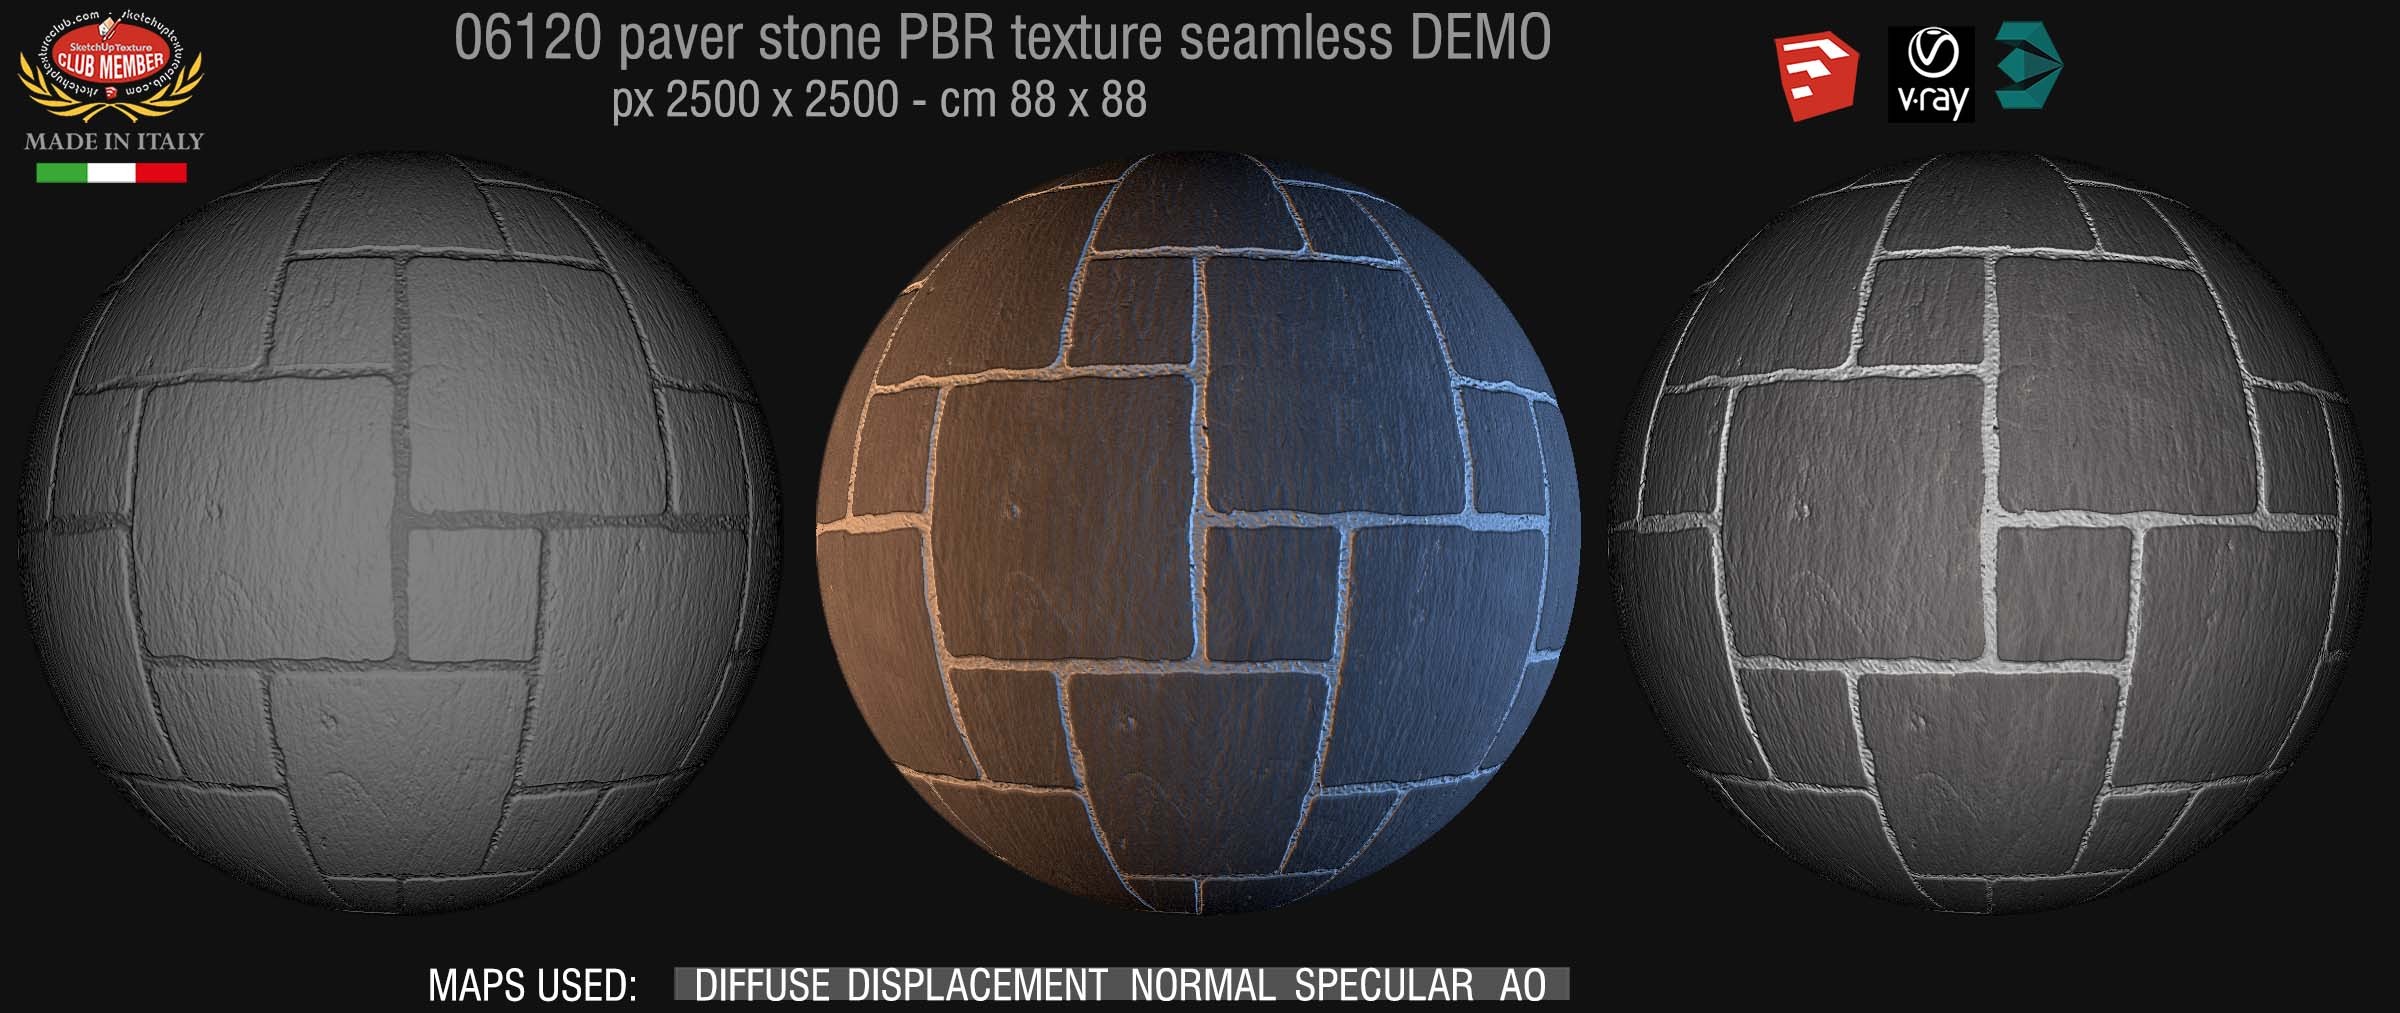 06120 paver stone PBR texture seamless DEMO